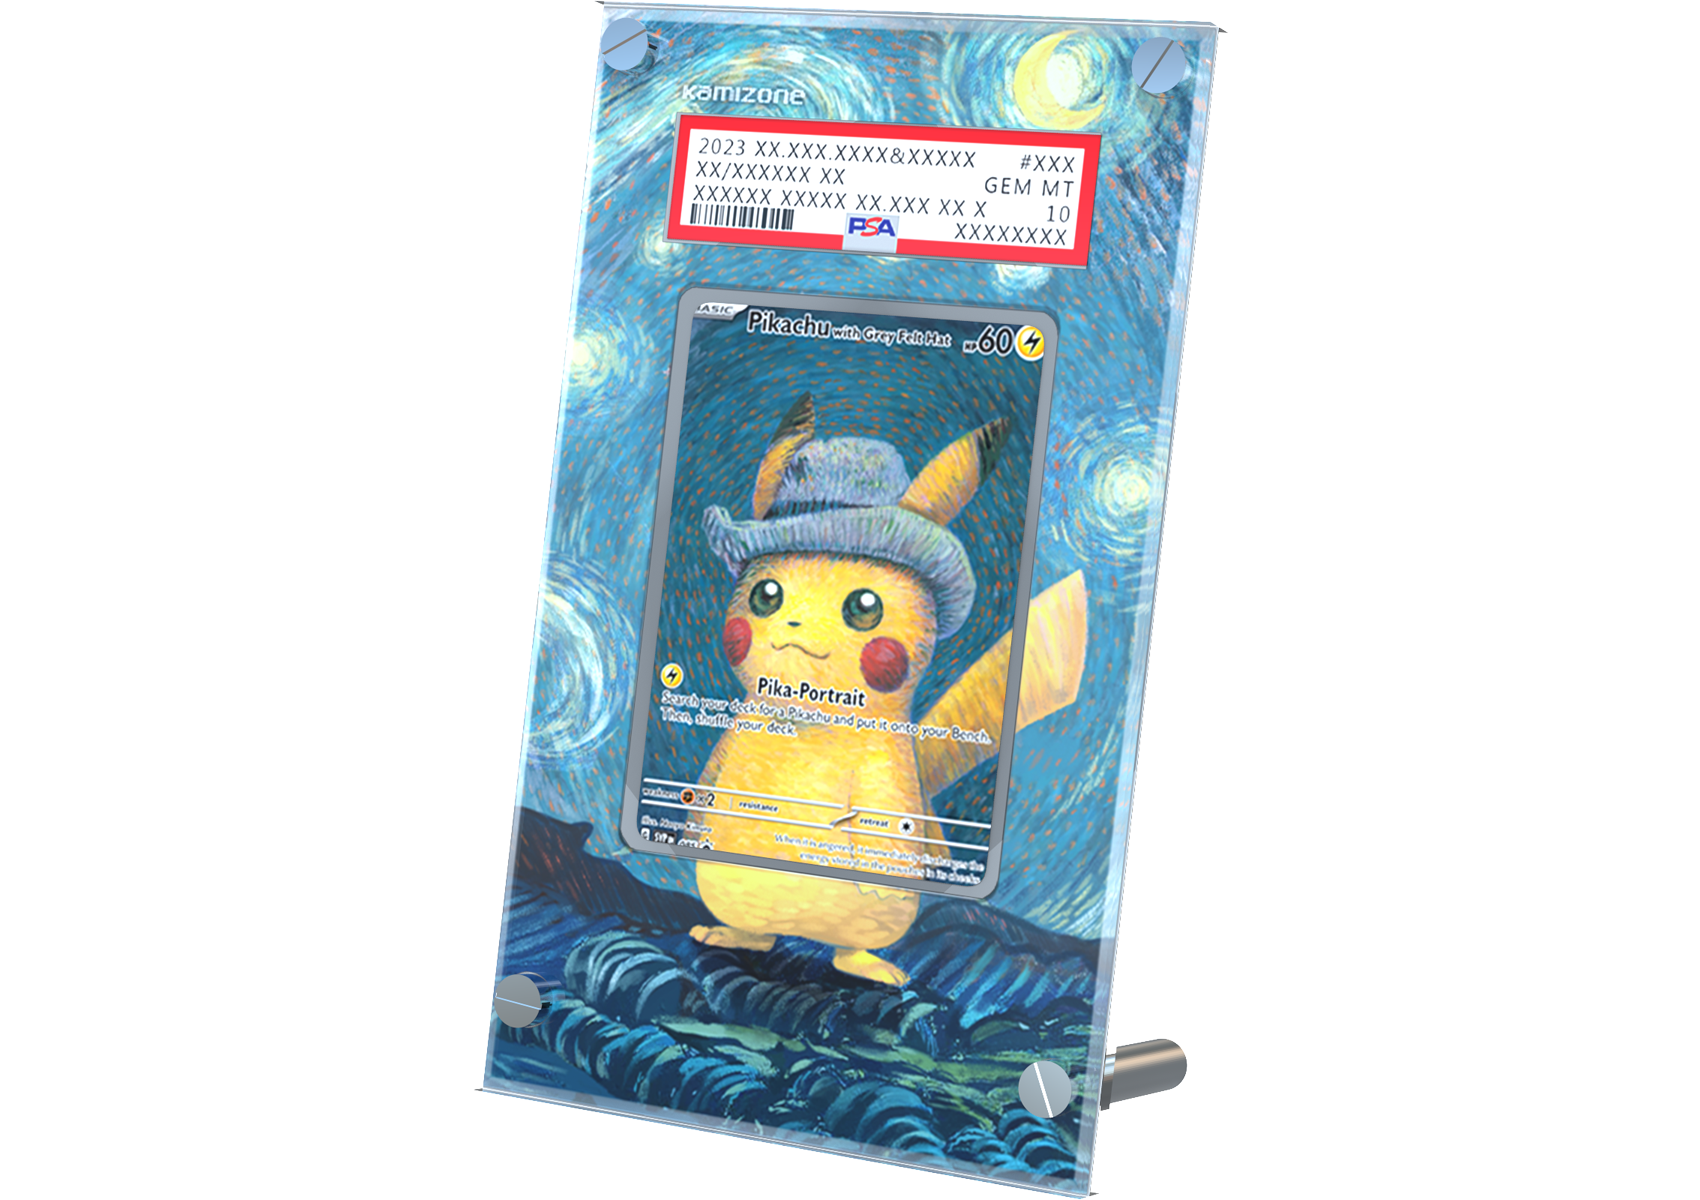 Pikachu with a Grey Felt Hat - Van Gogh Promo - PSA Card Case